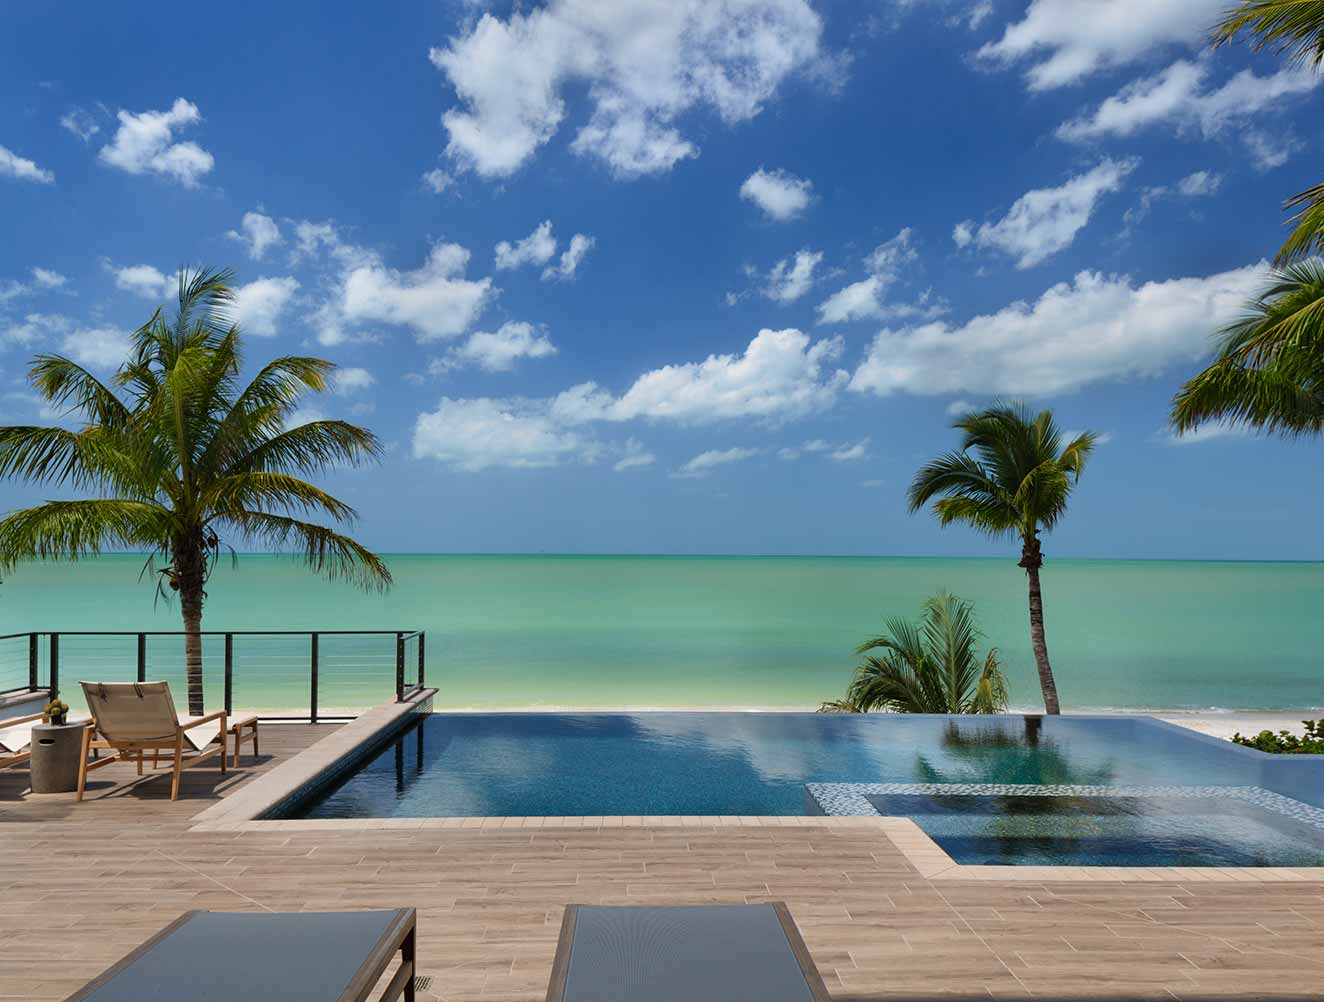 Portfolio of Pools in Naples, Florida Luxury Homes. Oceanfront Infinity Pool. Designed by Kukk Architecture & Design Naples.